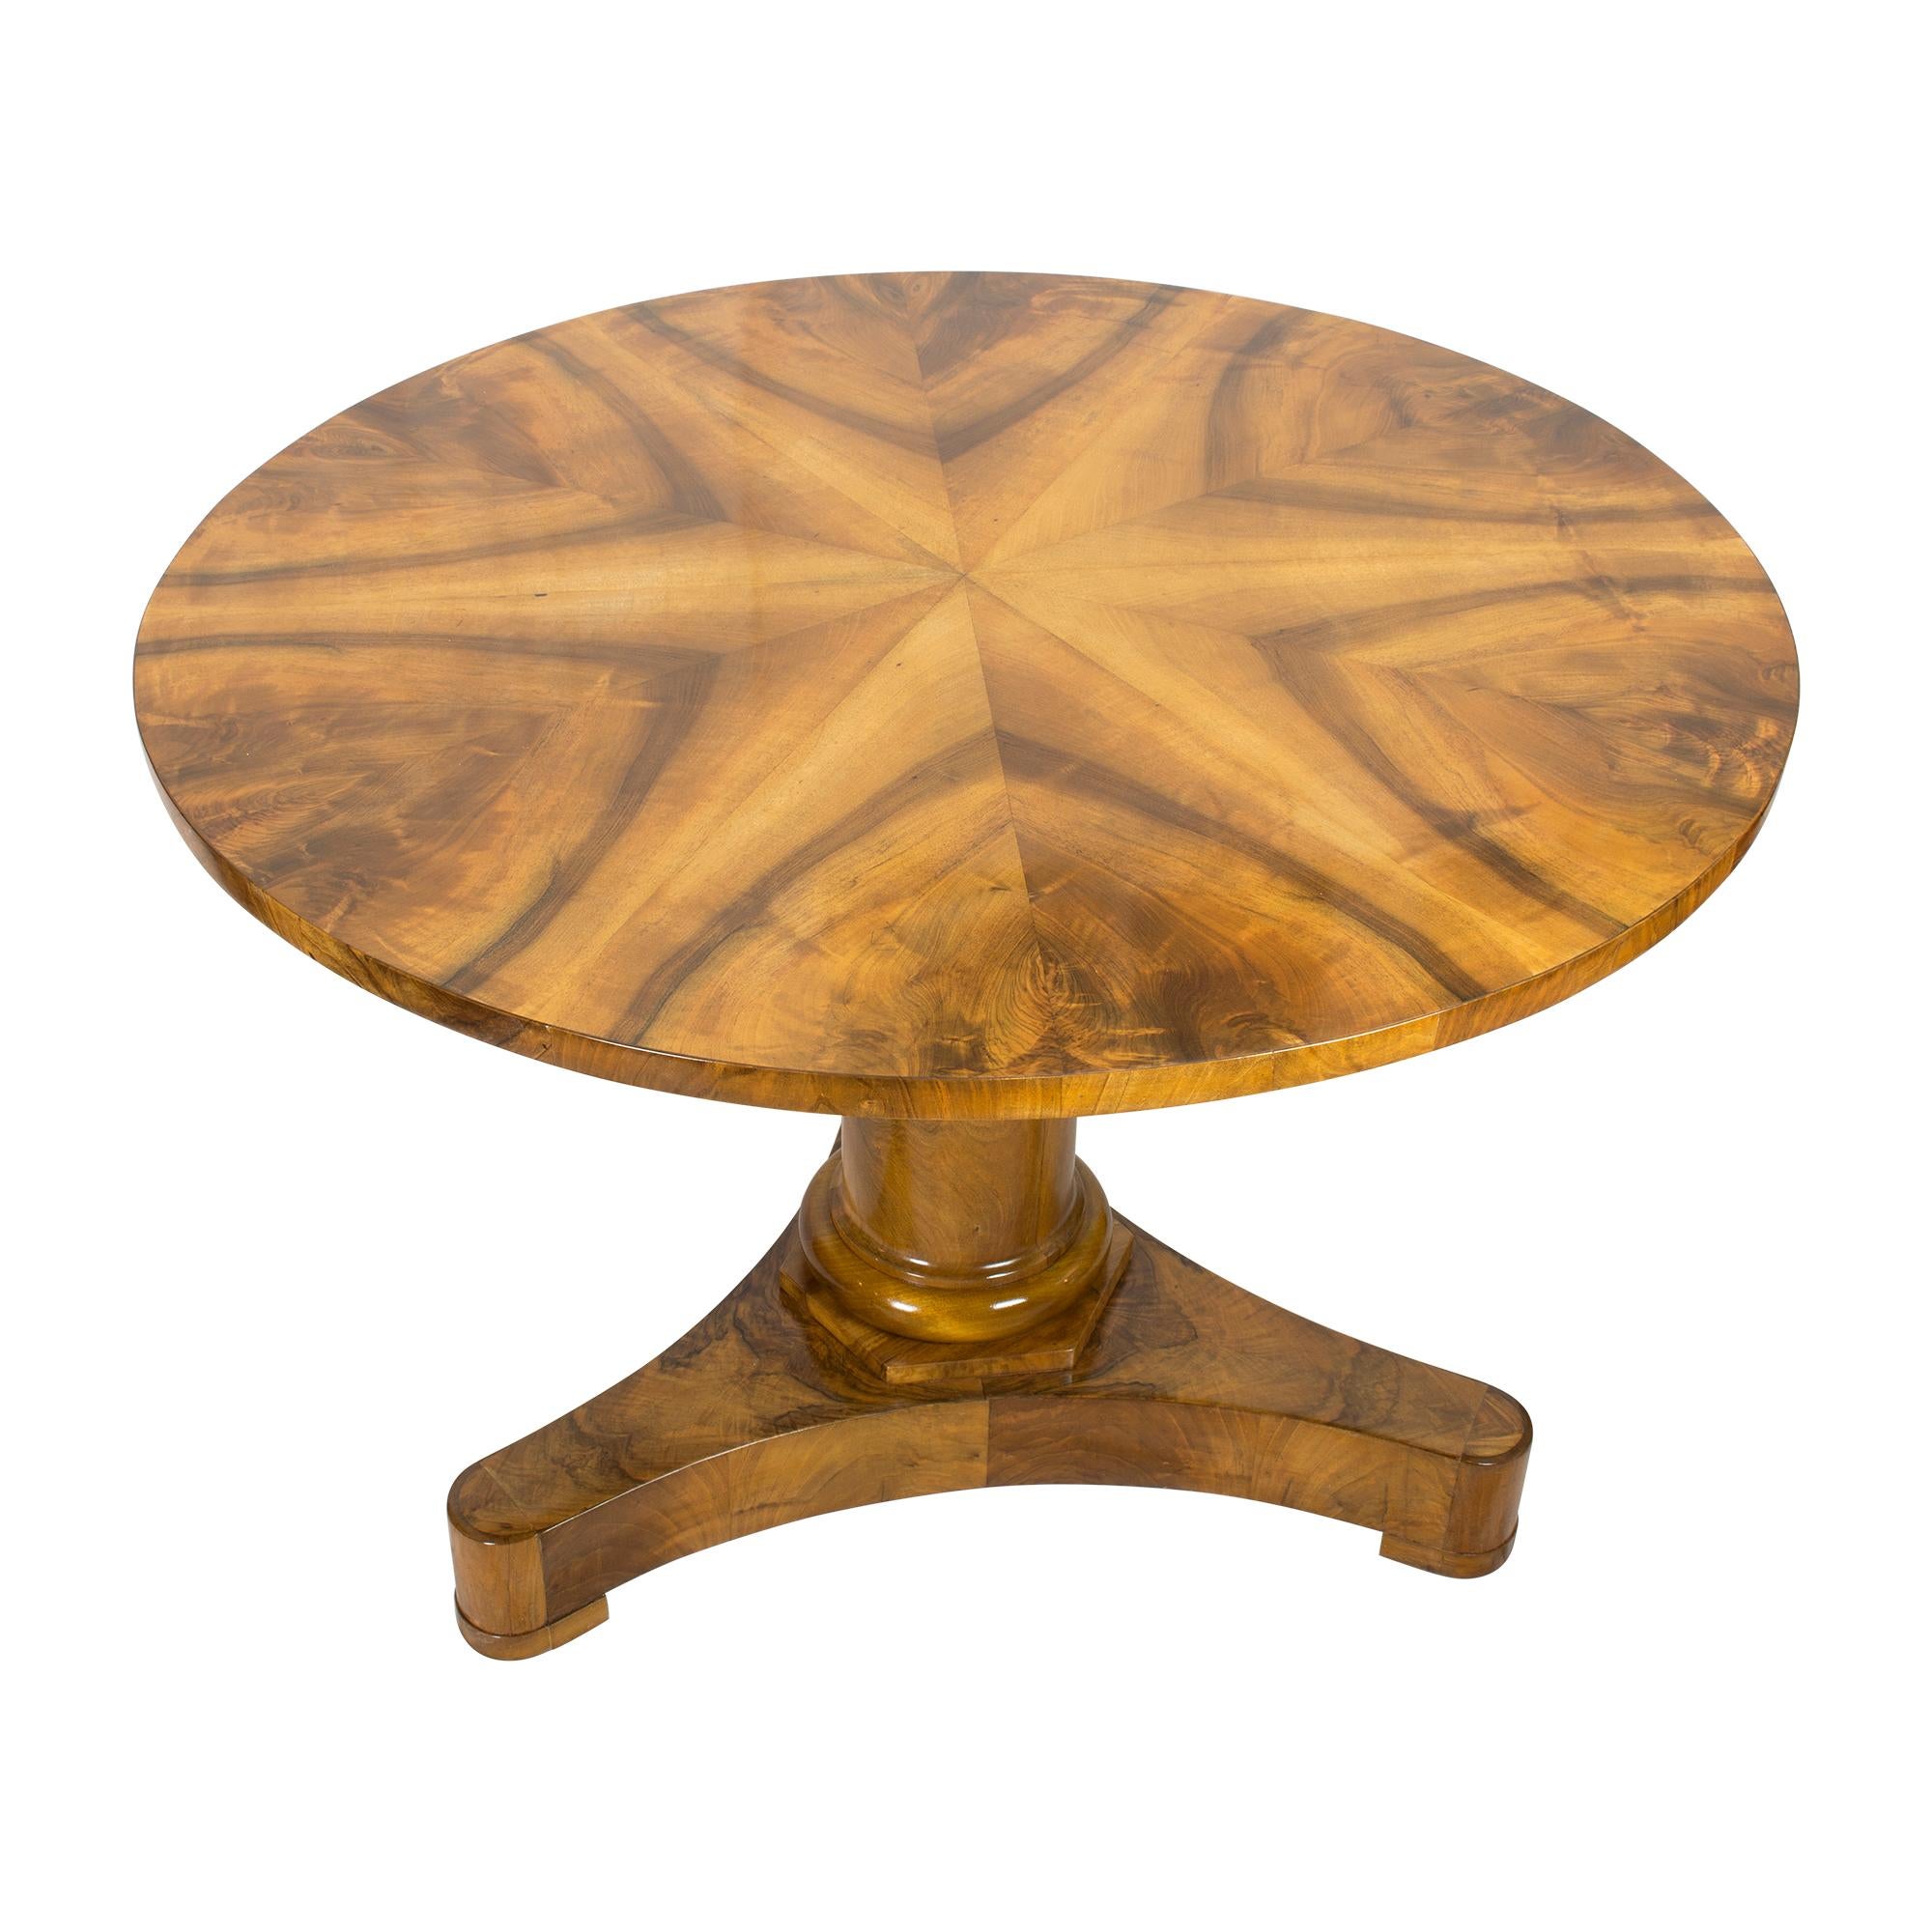 German 19th Century Biedermeier Round Salon Walnut Table For Sale